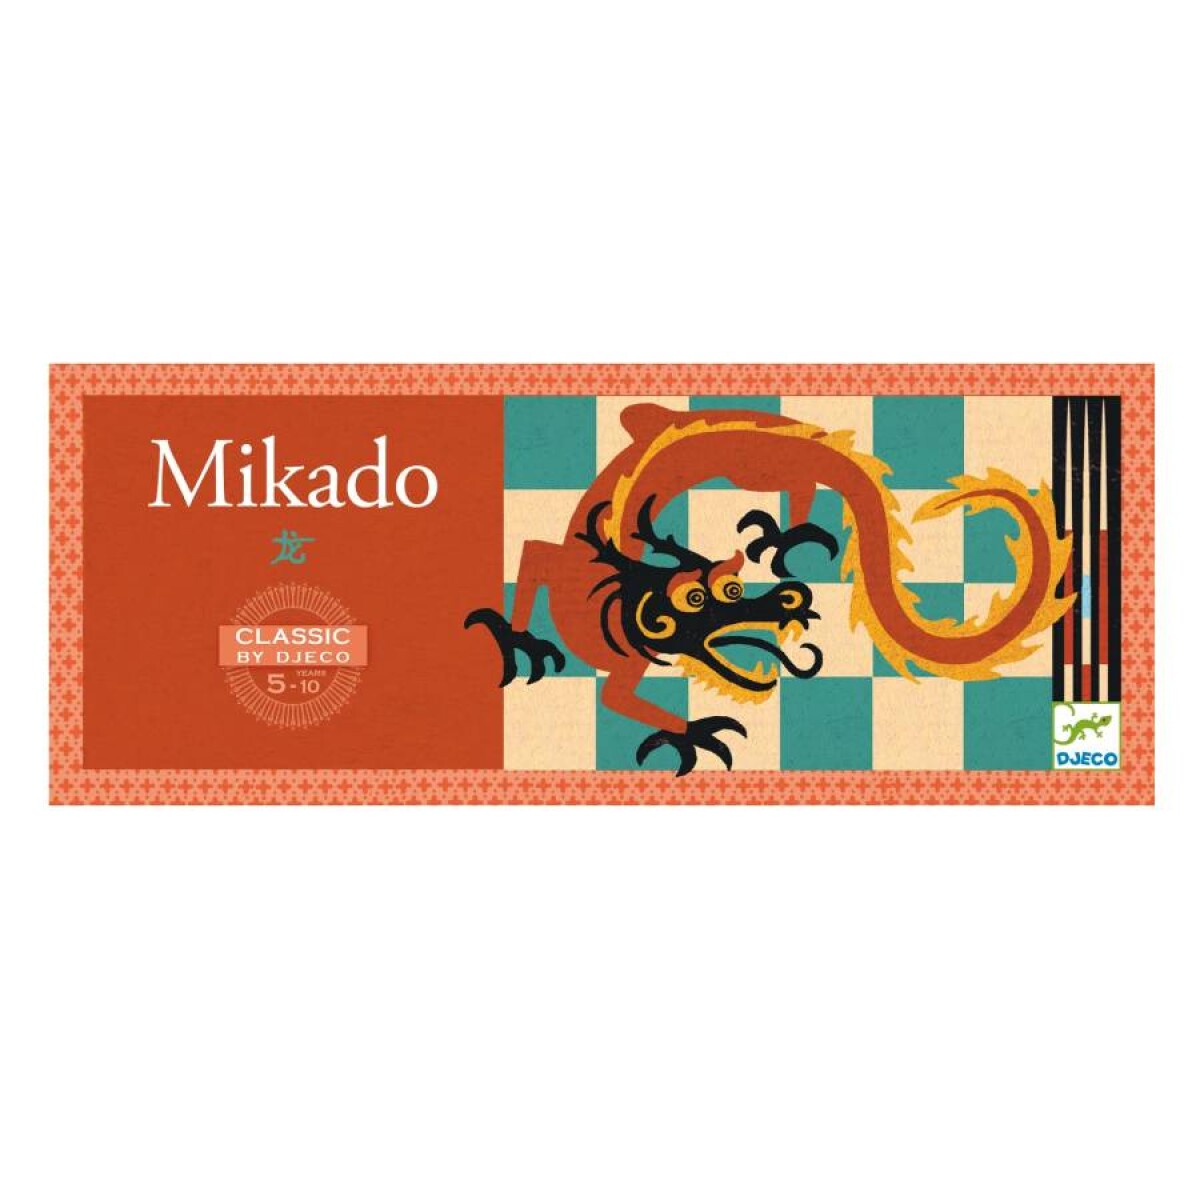 Mikado Classic by Djeco 